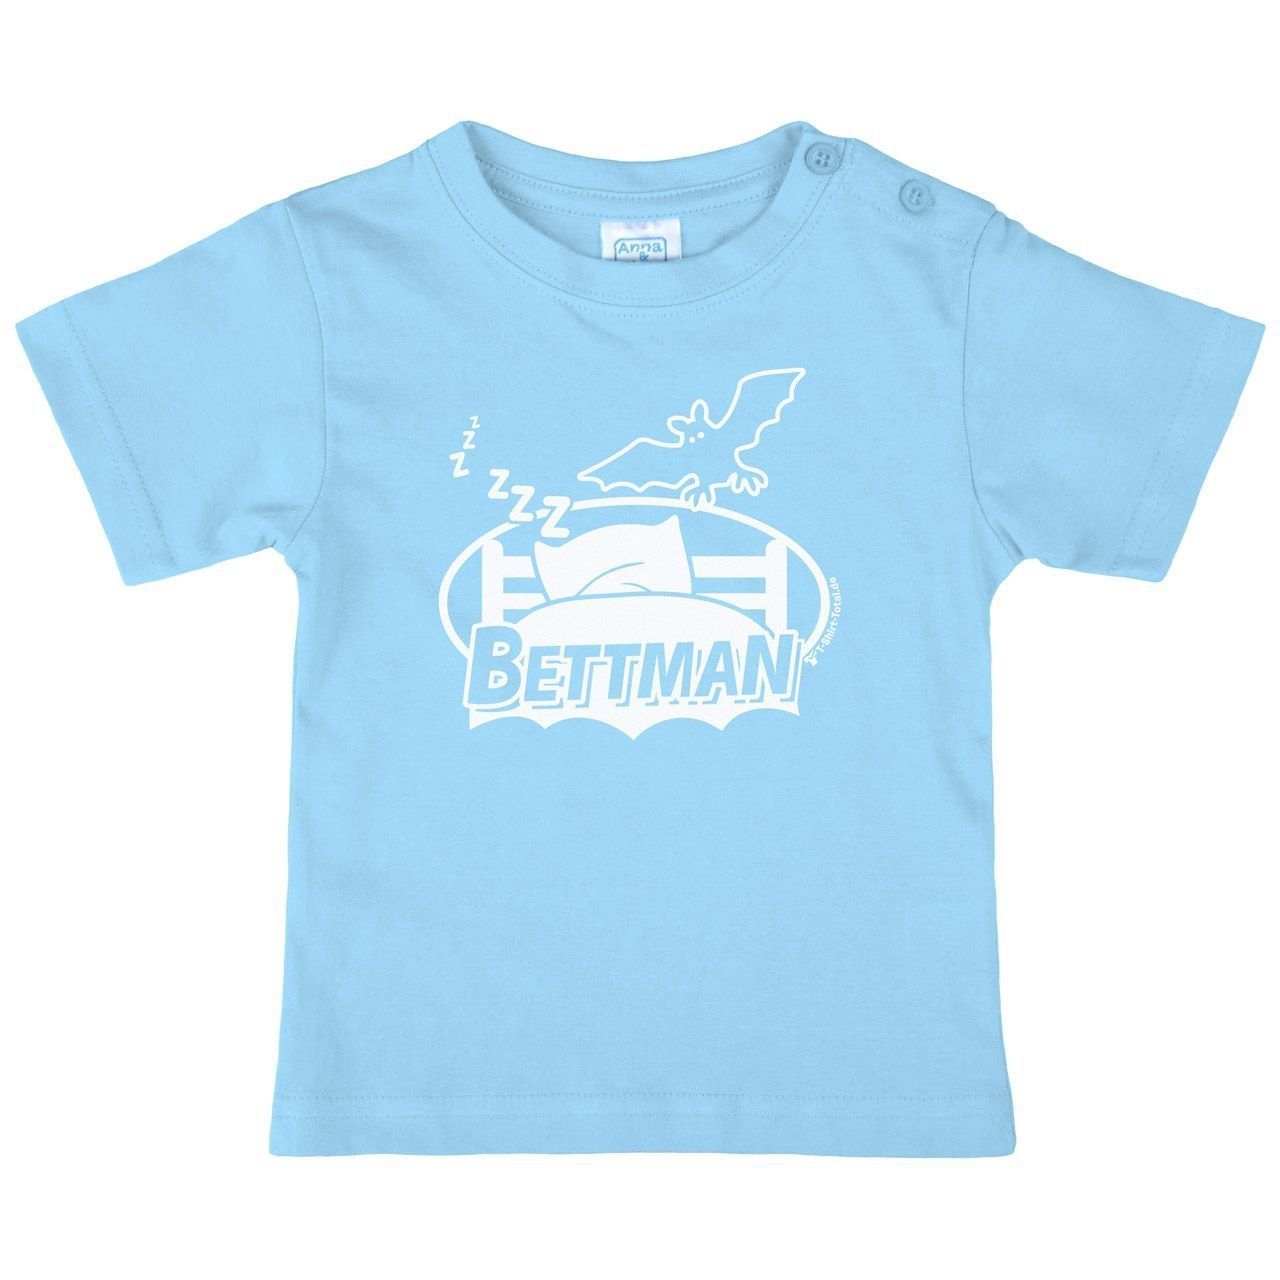 Bettman Kinder T-Shirt hellblau 56 / 62